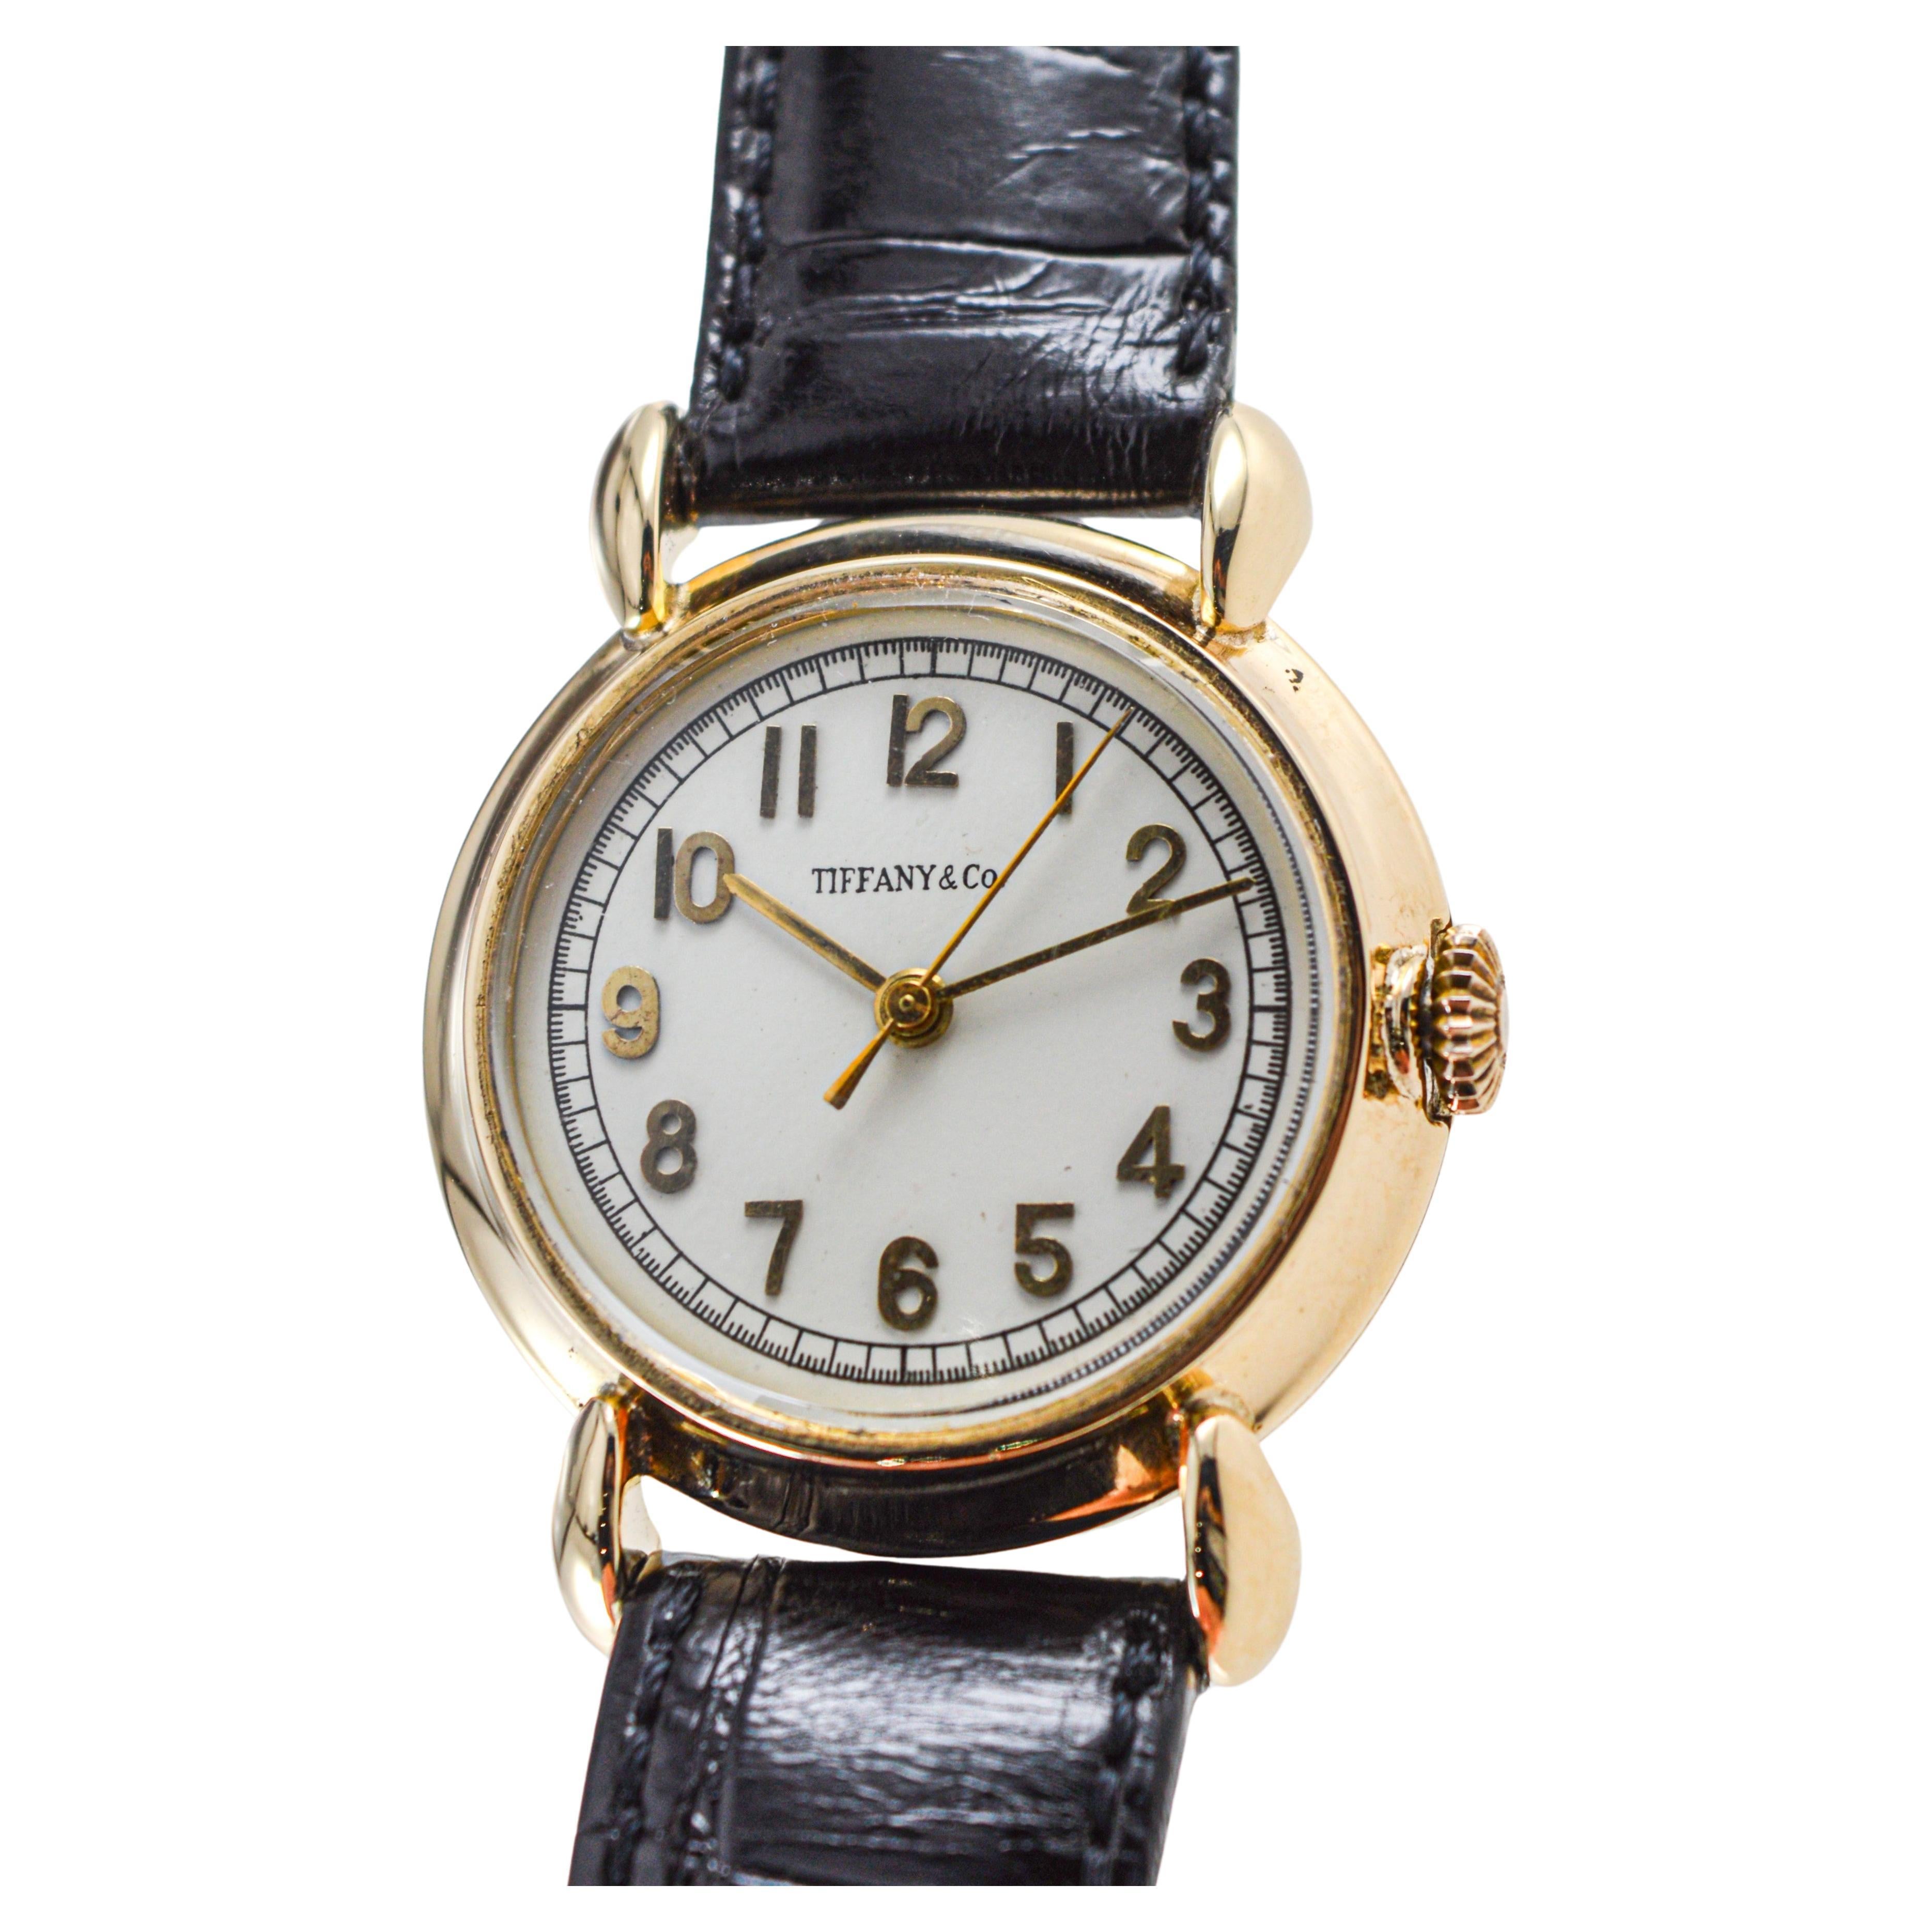 Tiffany & Co. by Schaffhausen International Watch Company Art Deco Style Watch For Sale 4